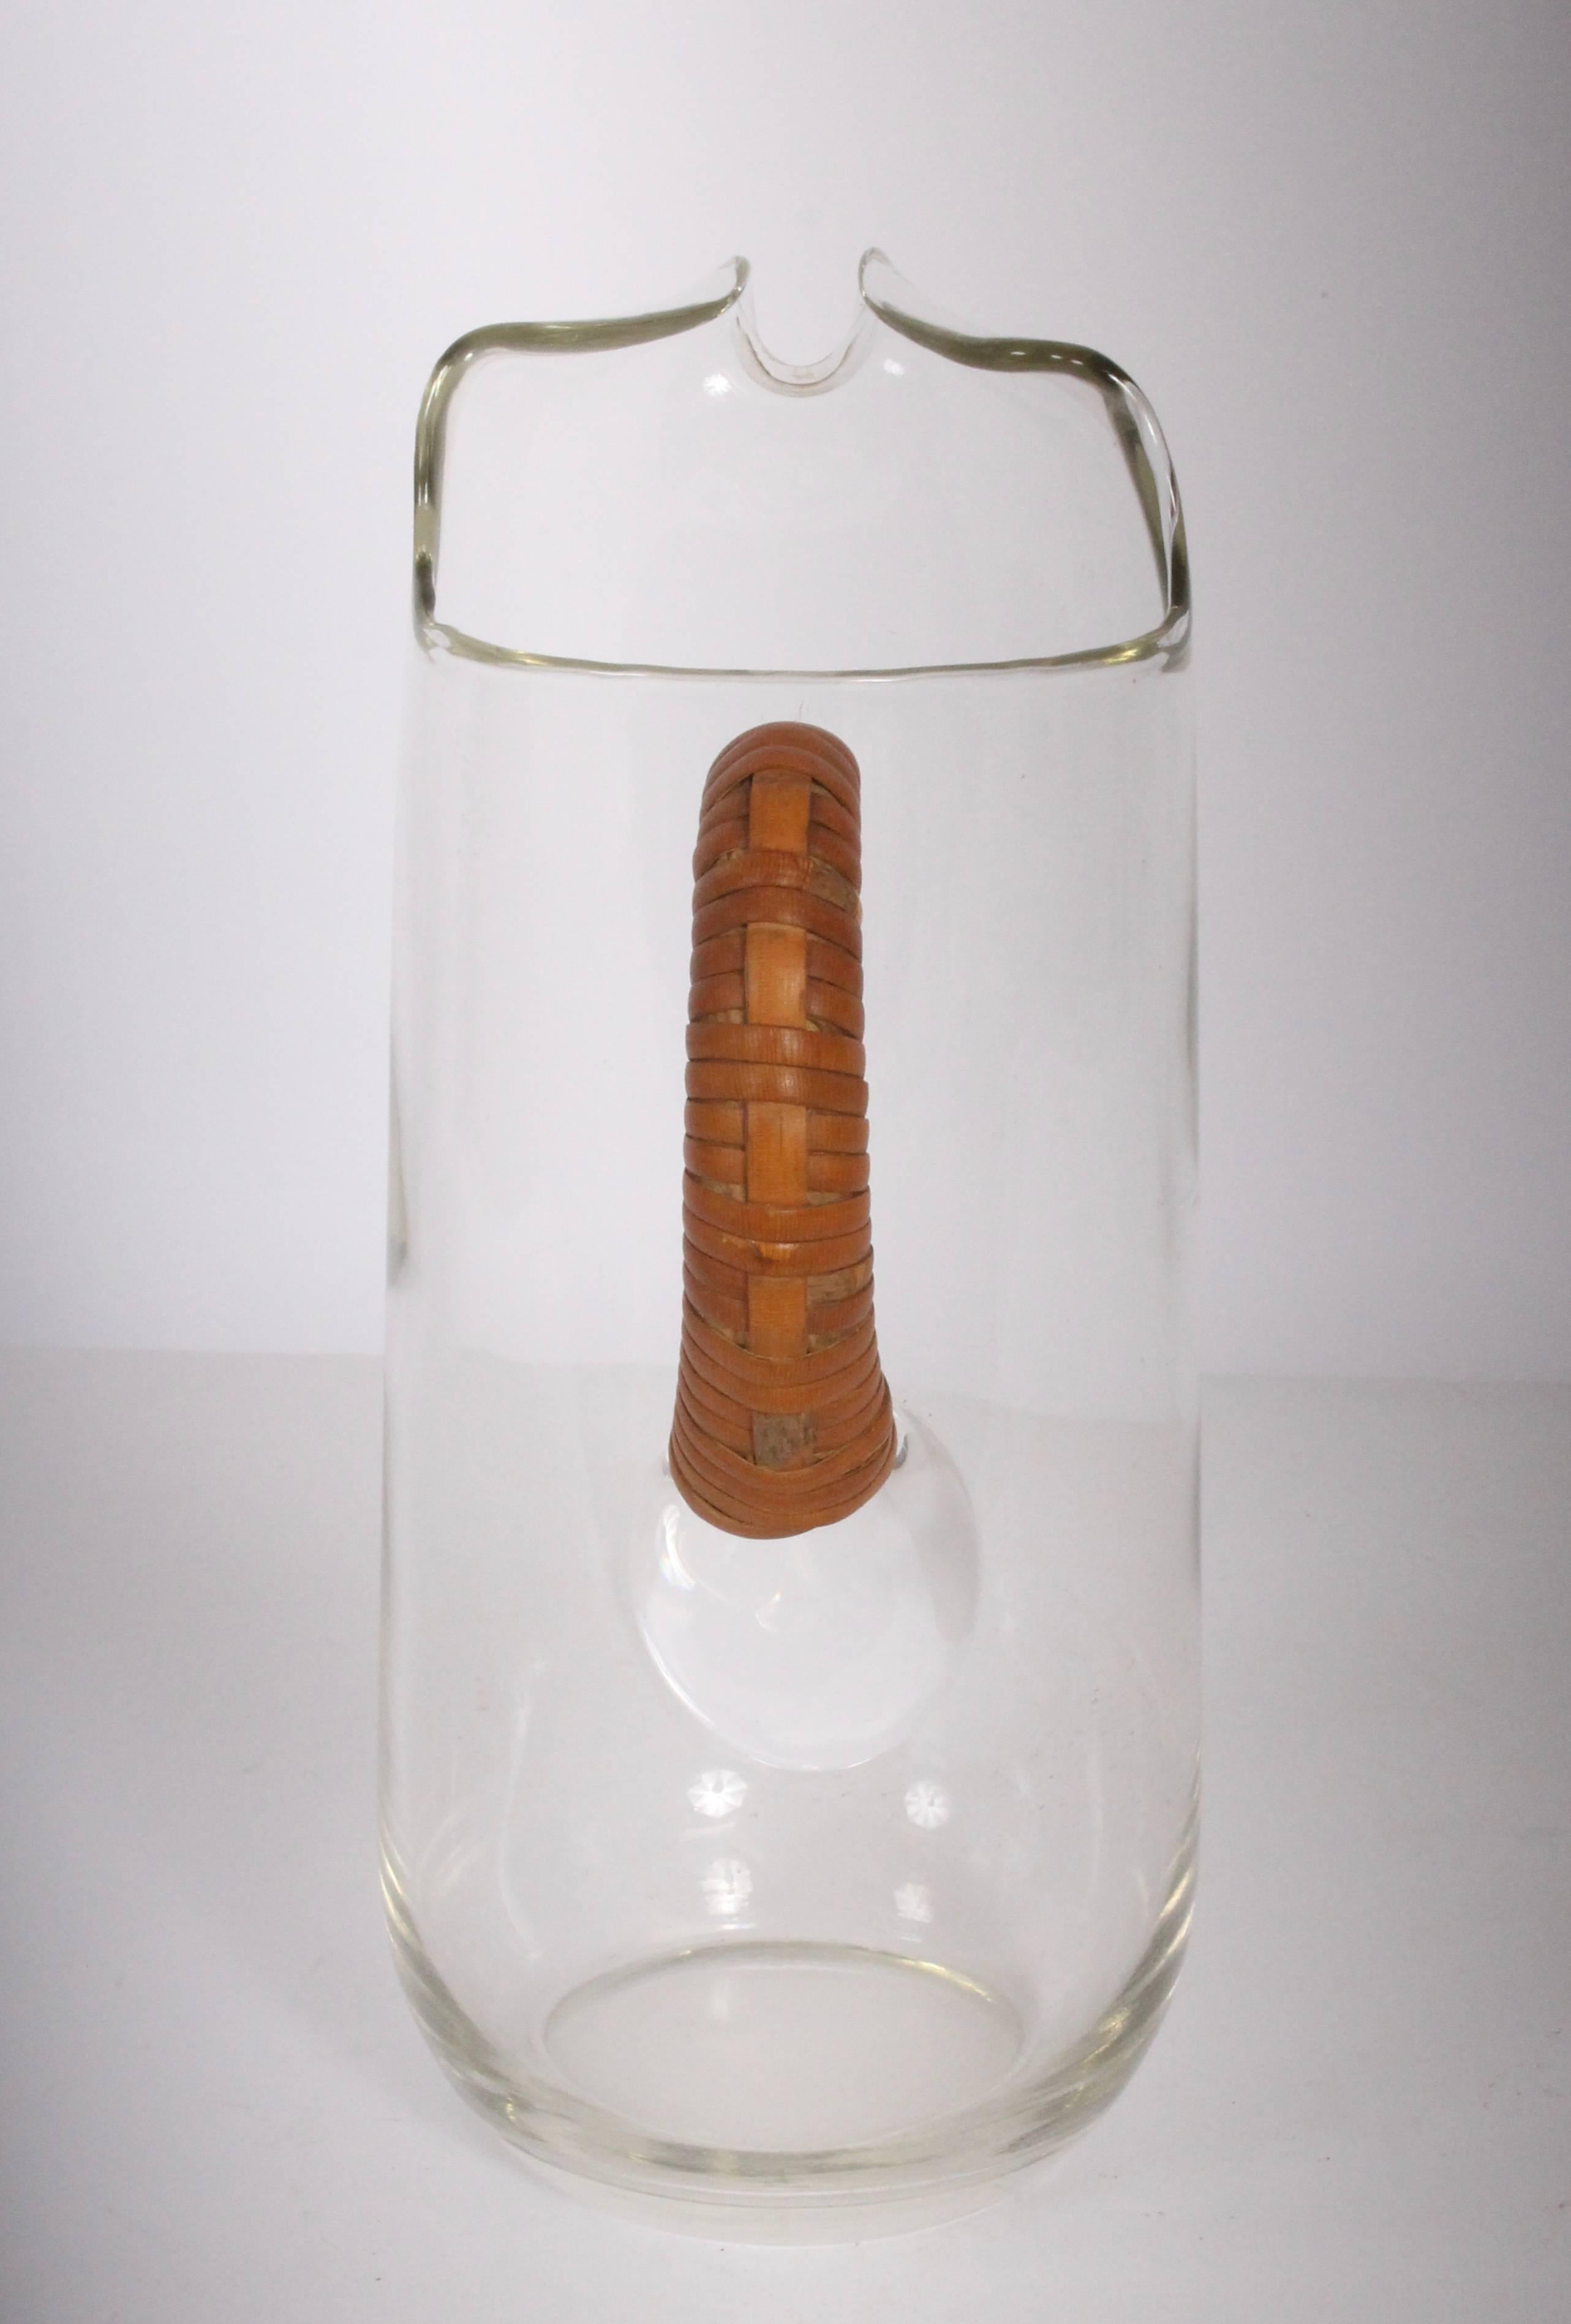 1950s glass pitcher